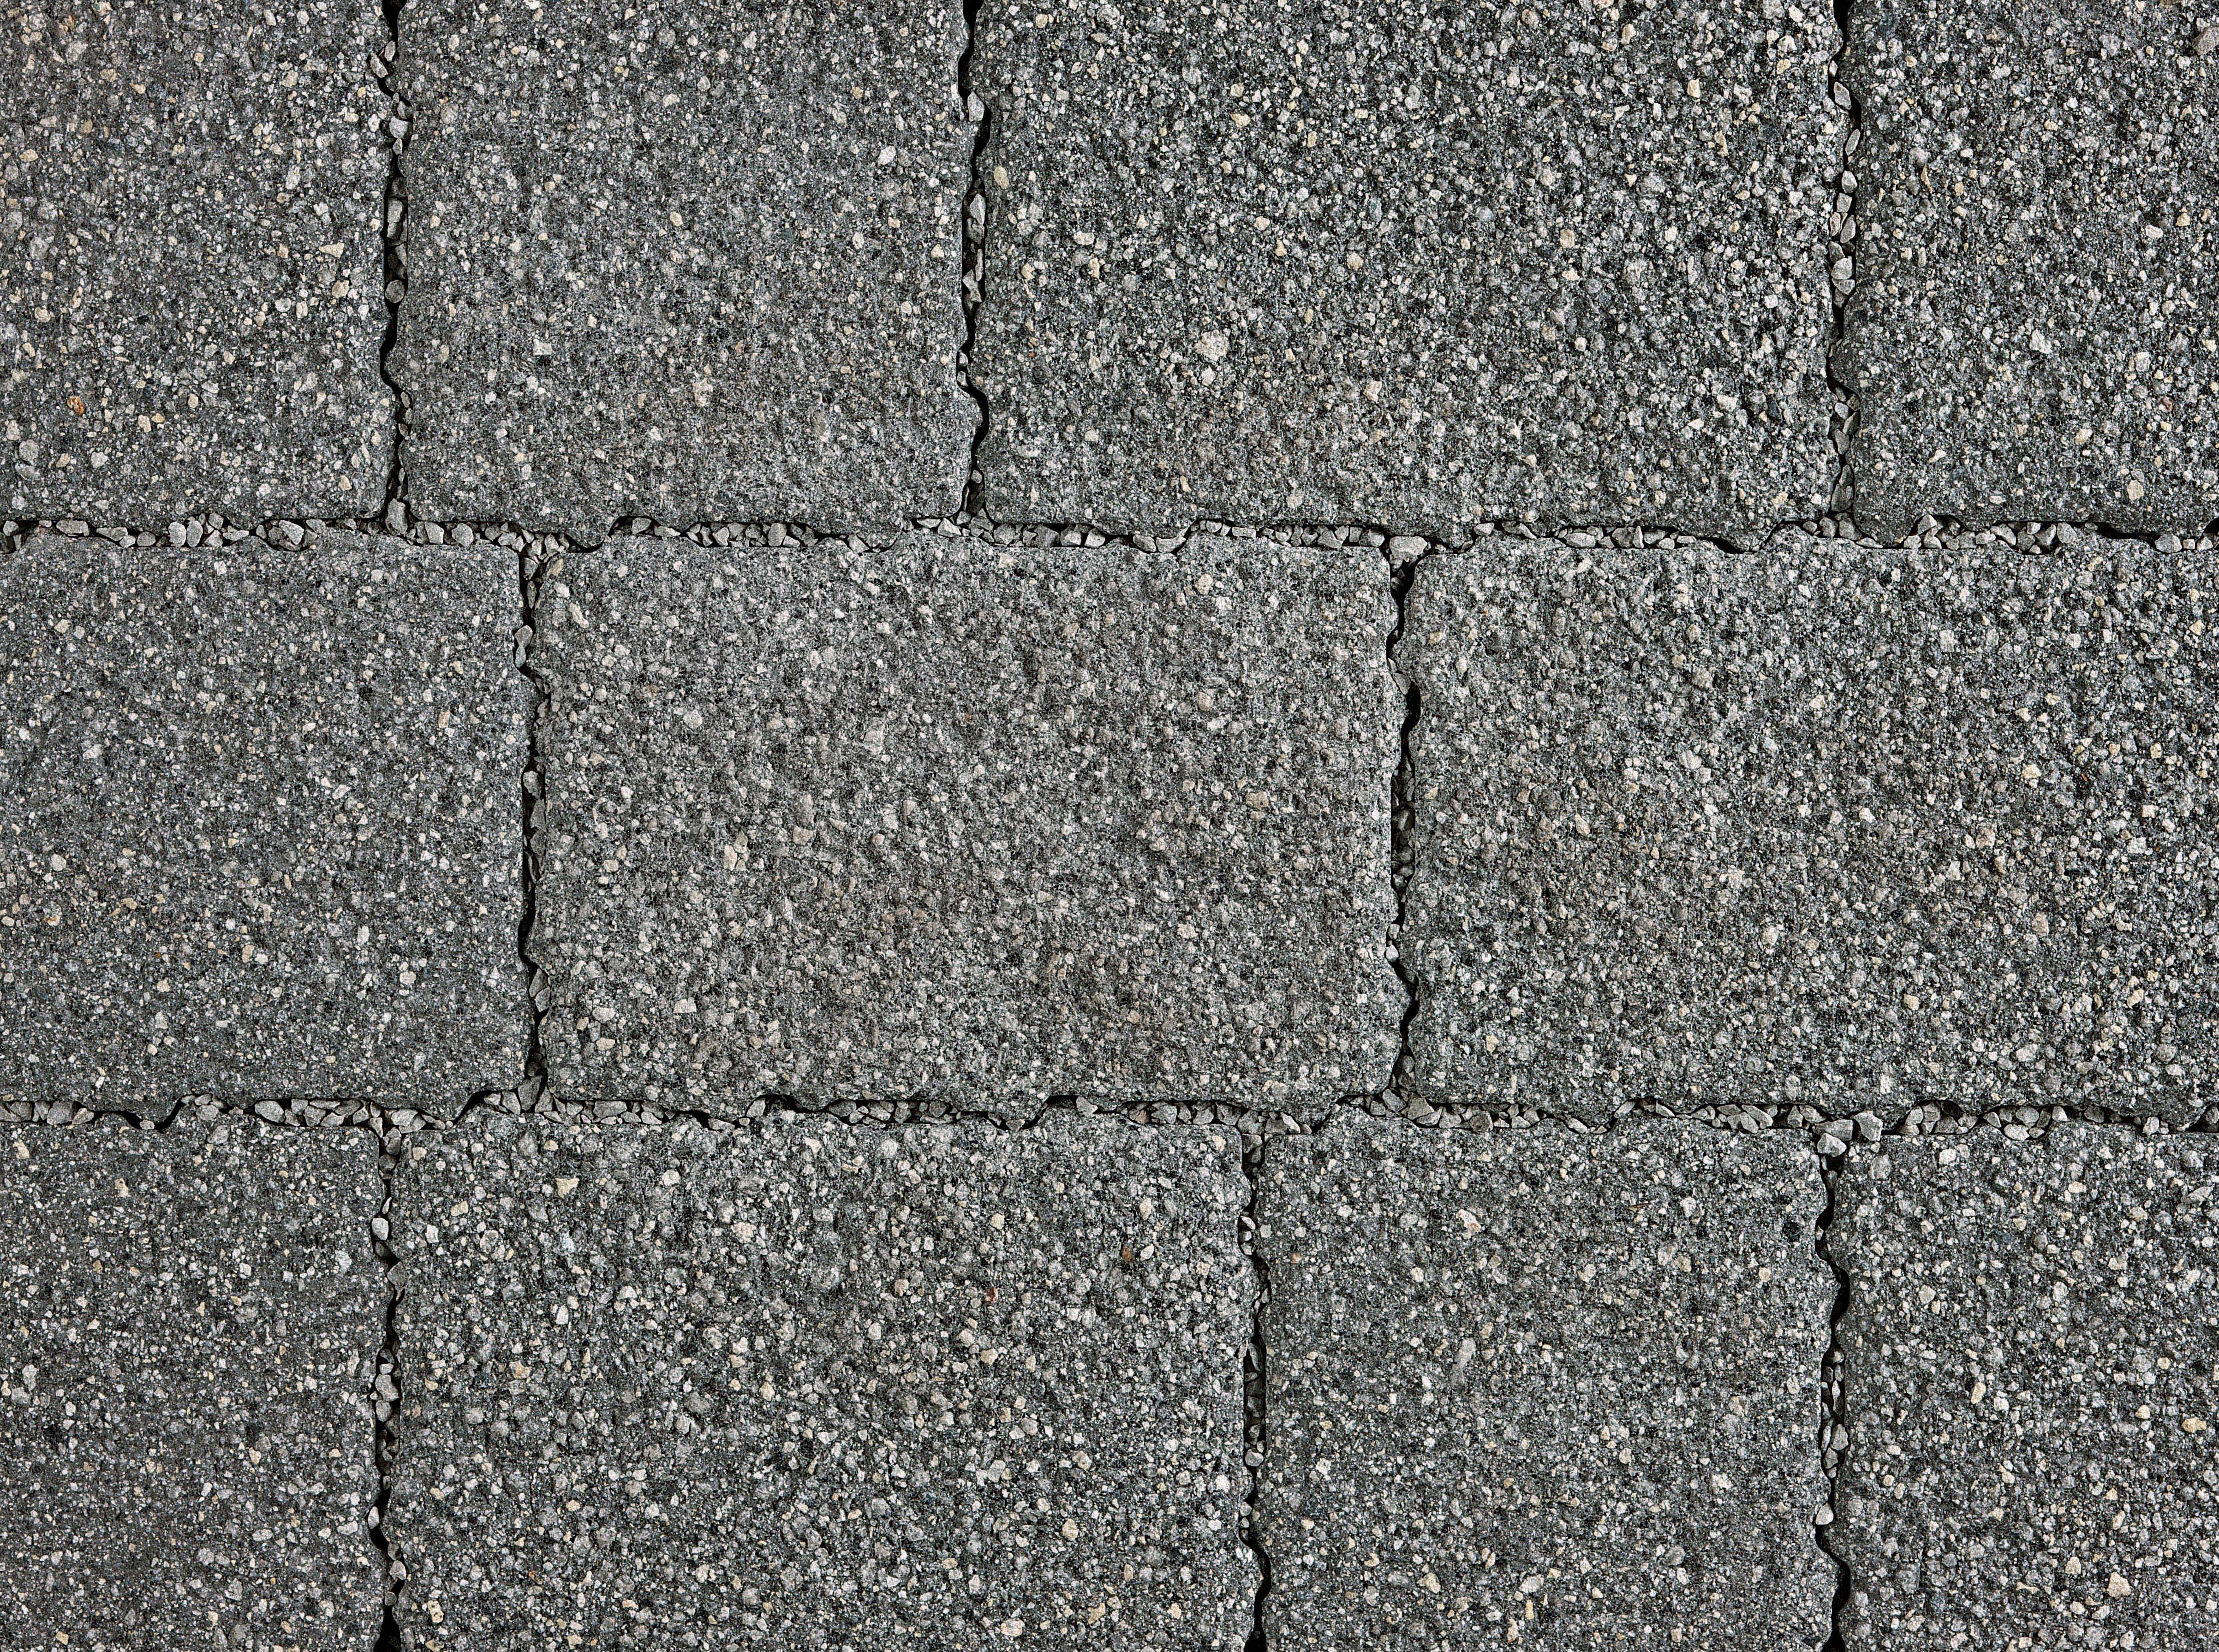 Marshalls Argent Priora Mixed Size Graphite Driveway Textured Block Paving - Sample